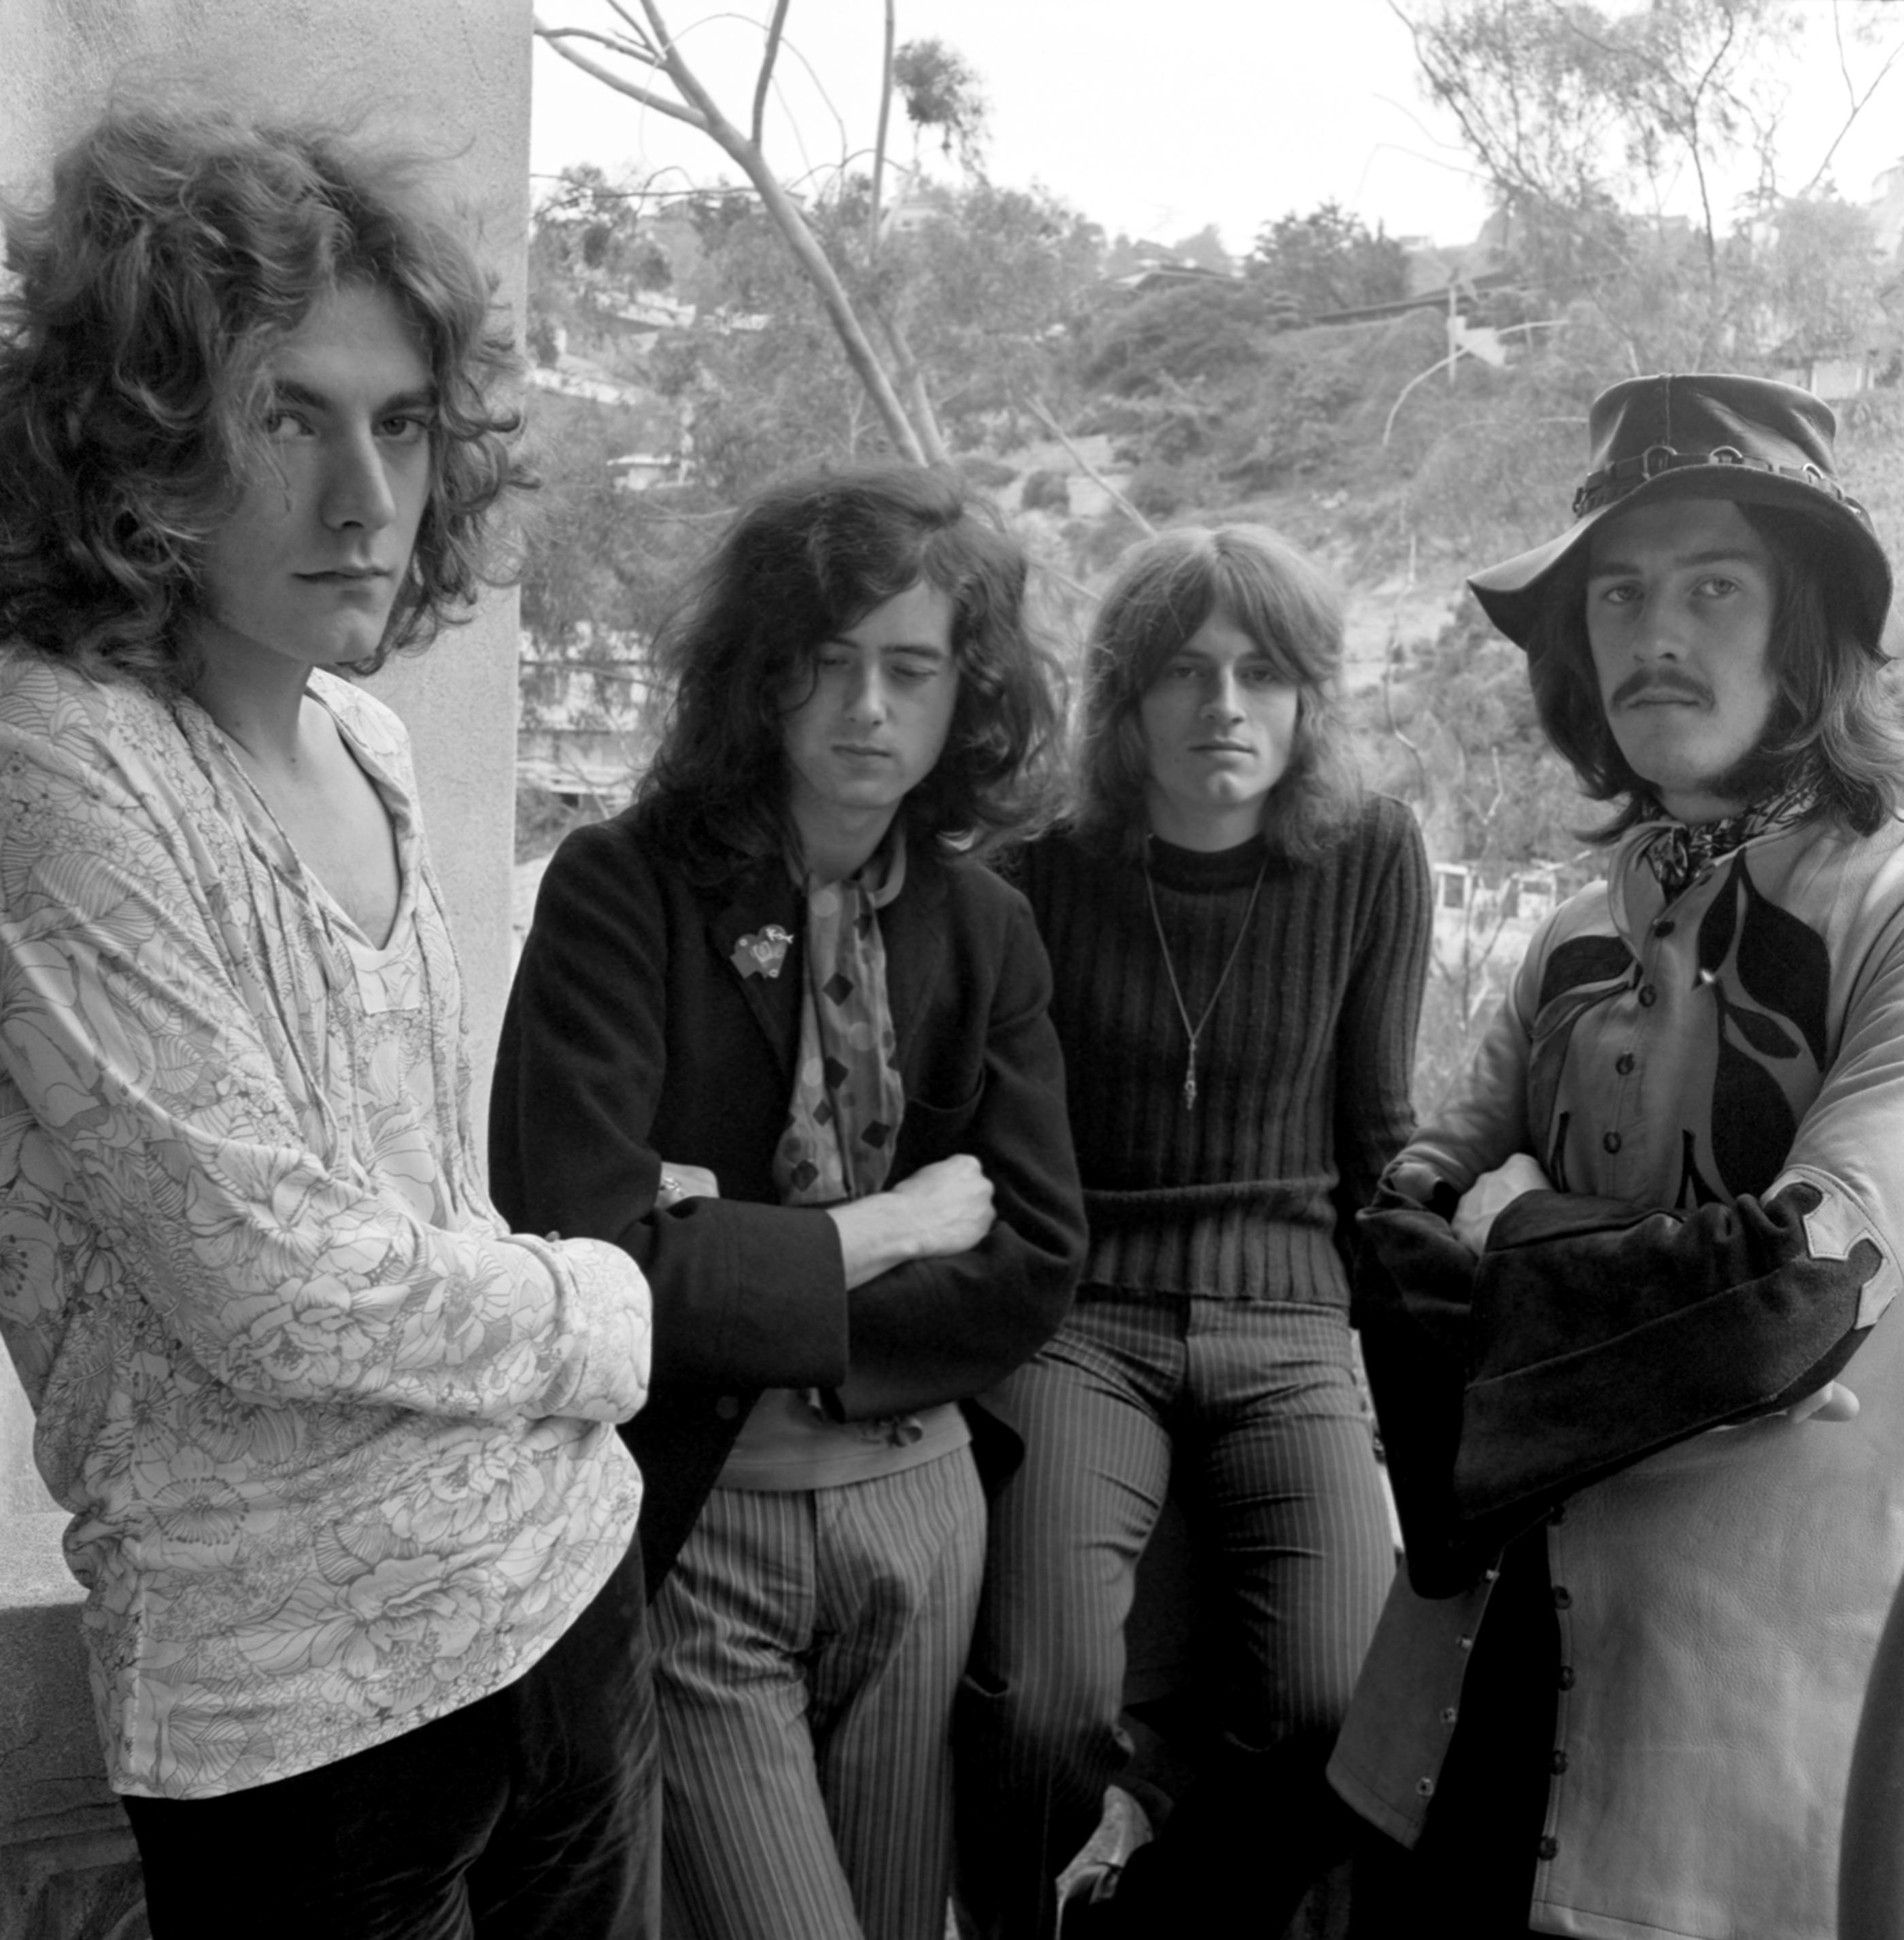 Unknown Portrait Photograph - Led Zeppelin Outside the Chateau Marmont